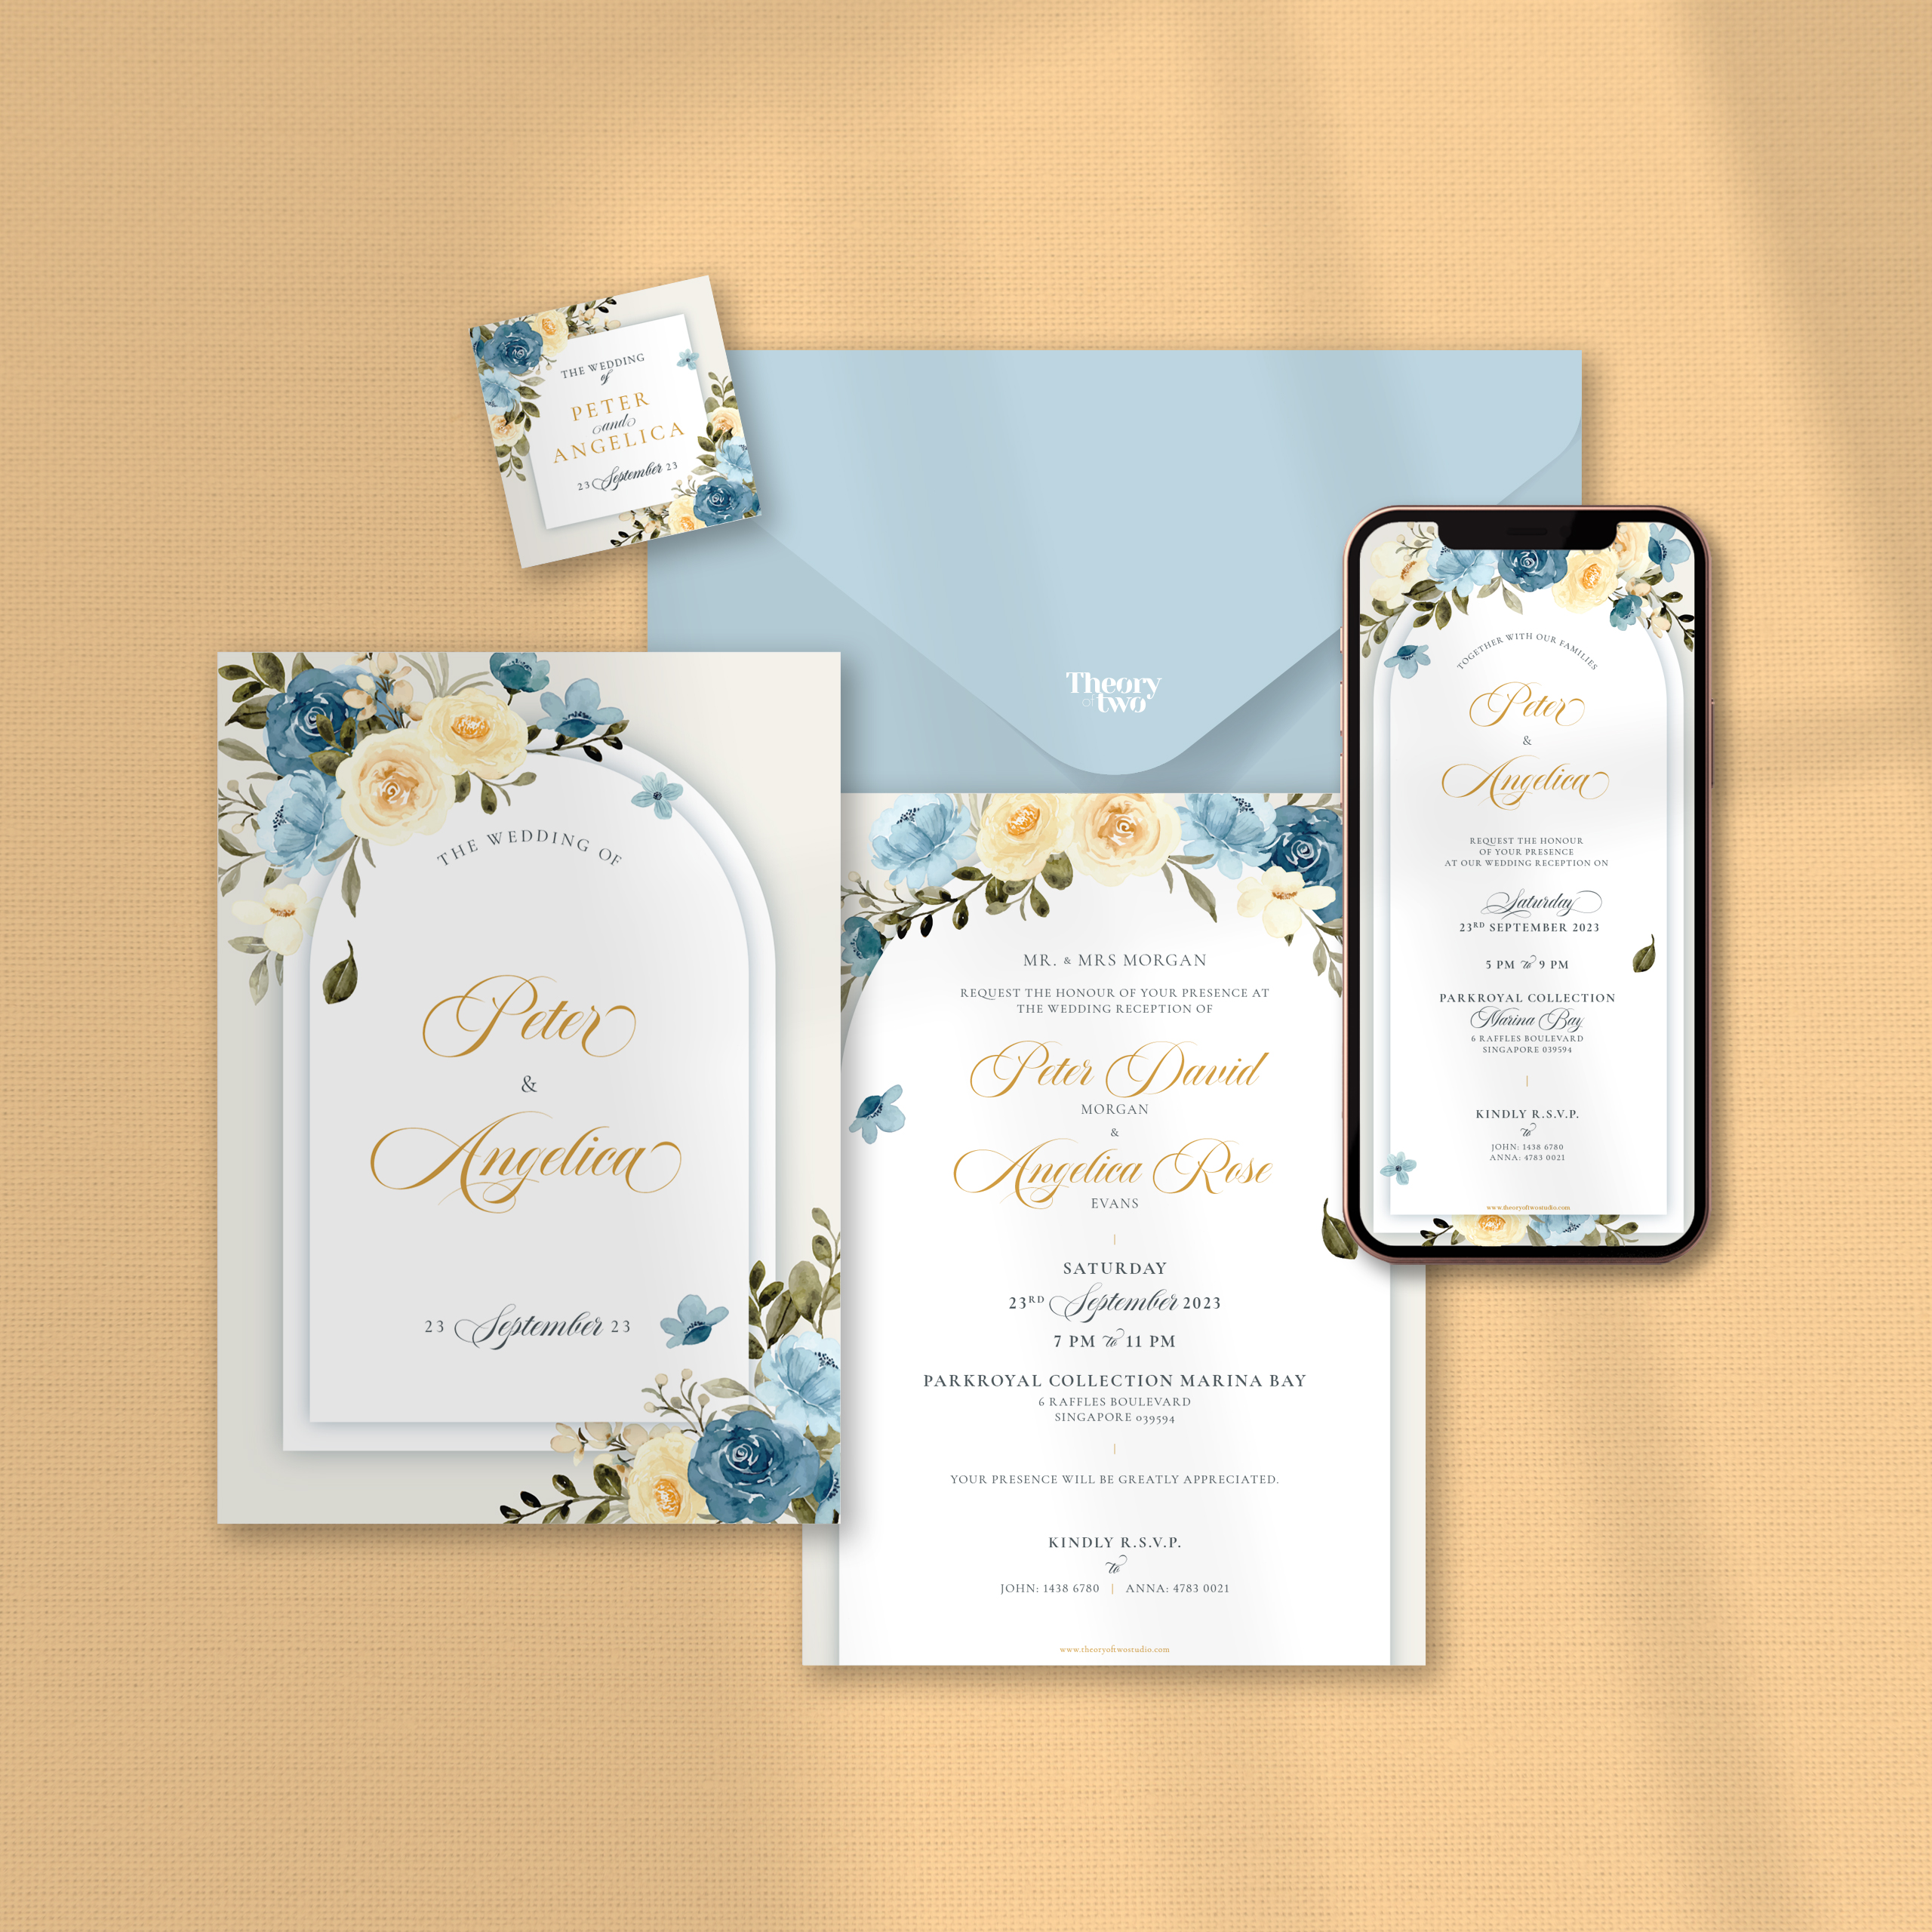 NEW!!! BLUE & CREAM FLORAL WEDDING INVITATION